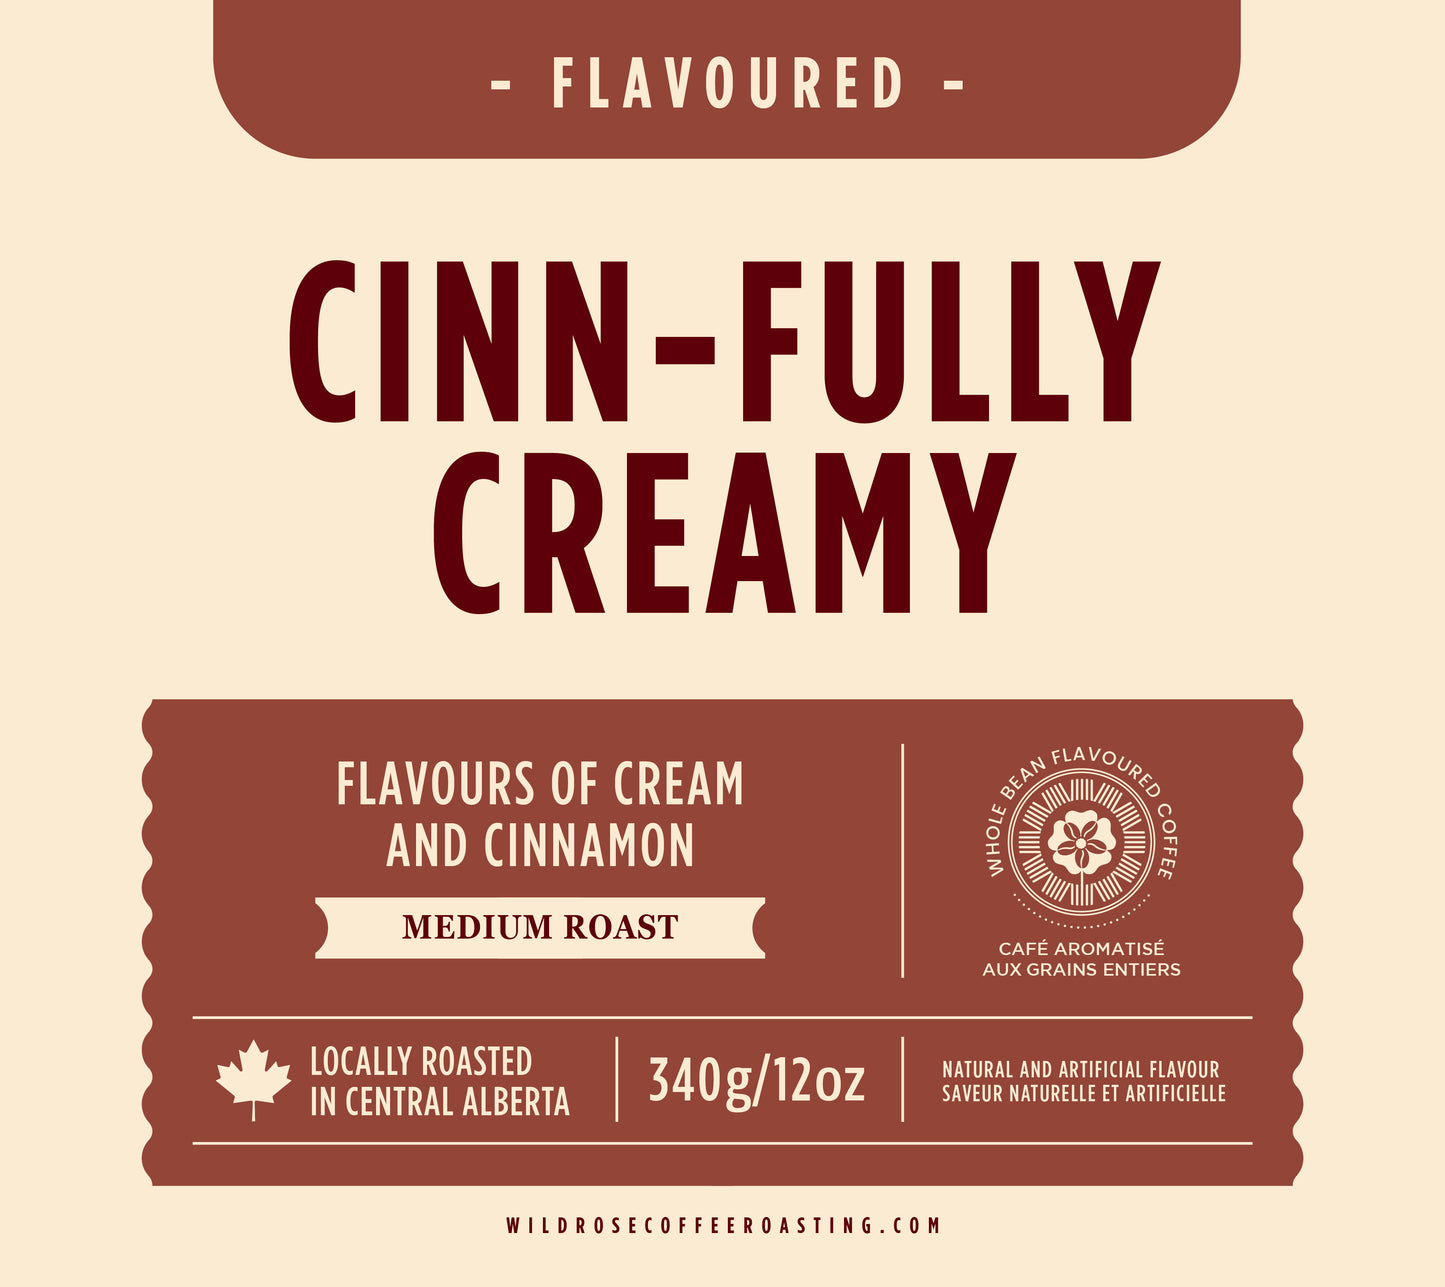 Cinn-Fully Creamy